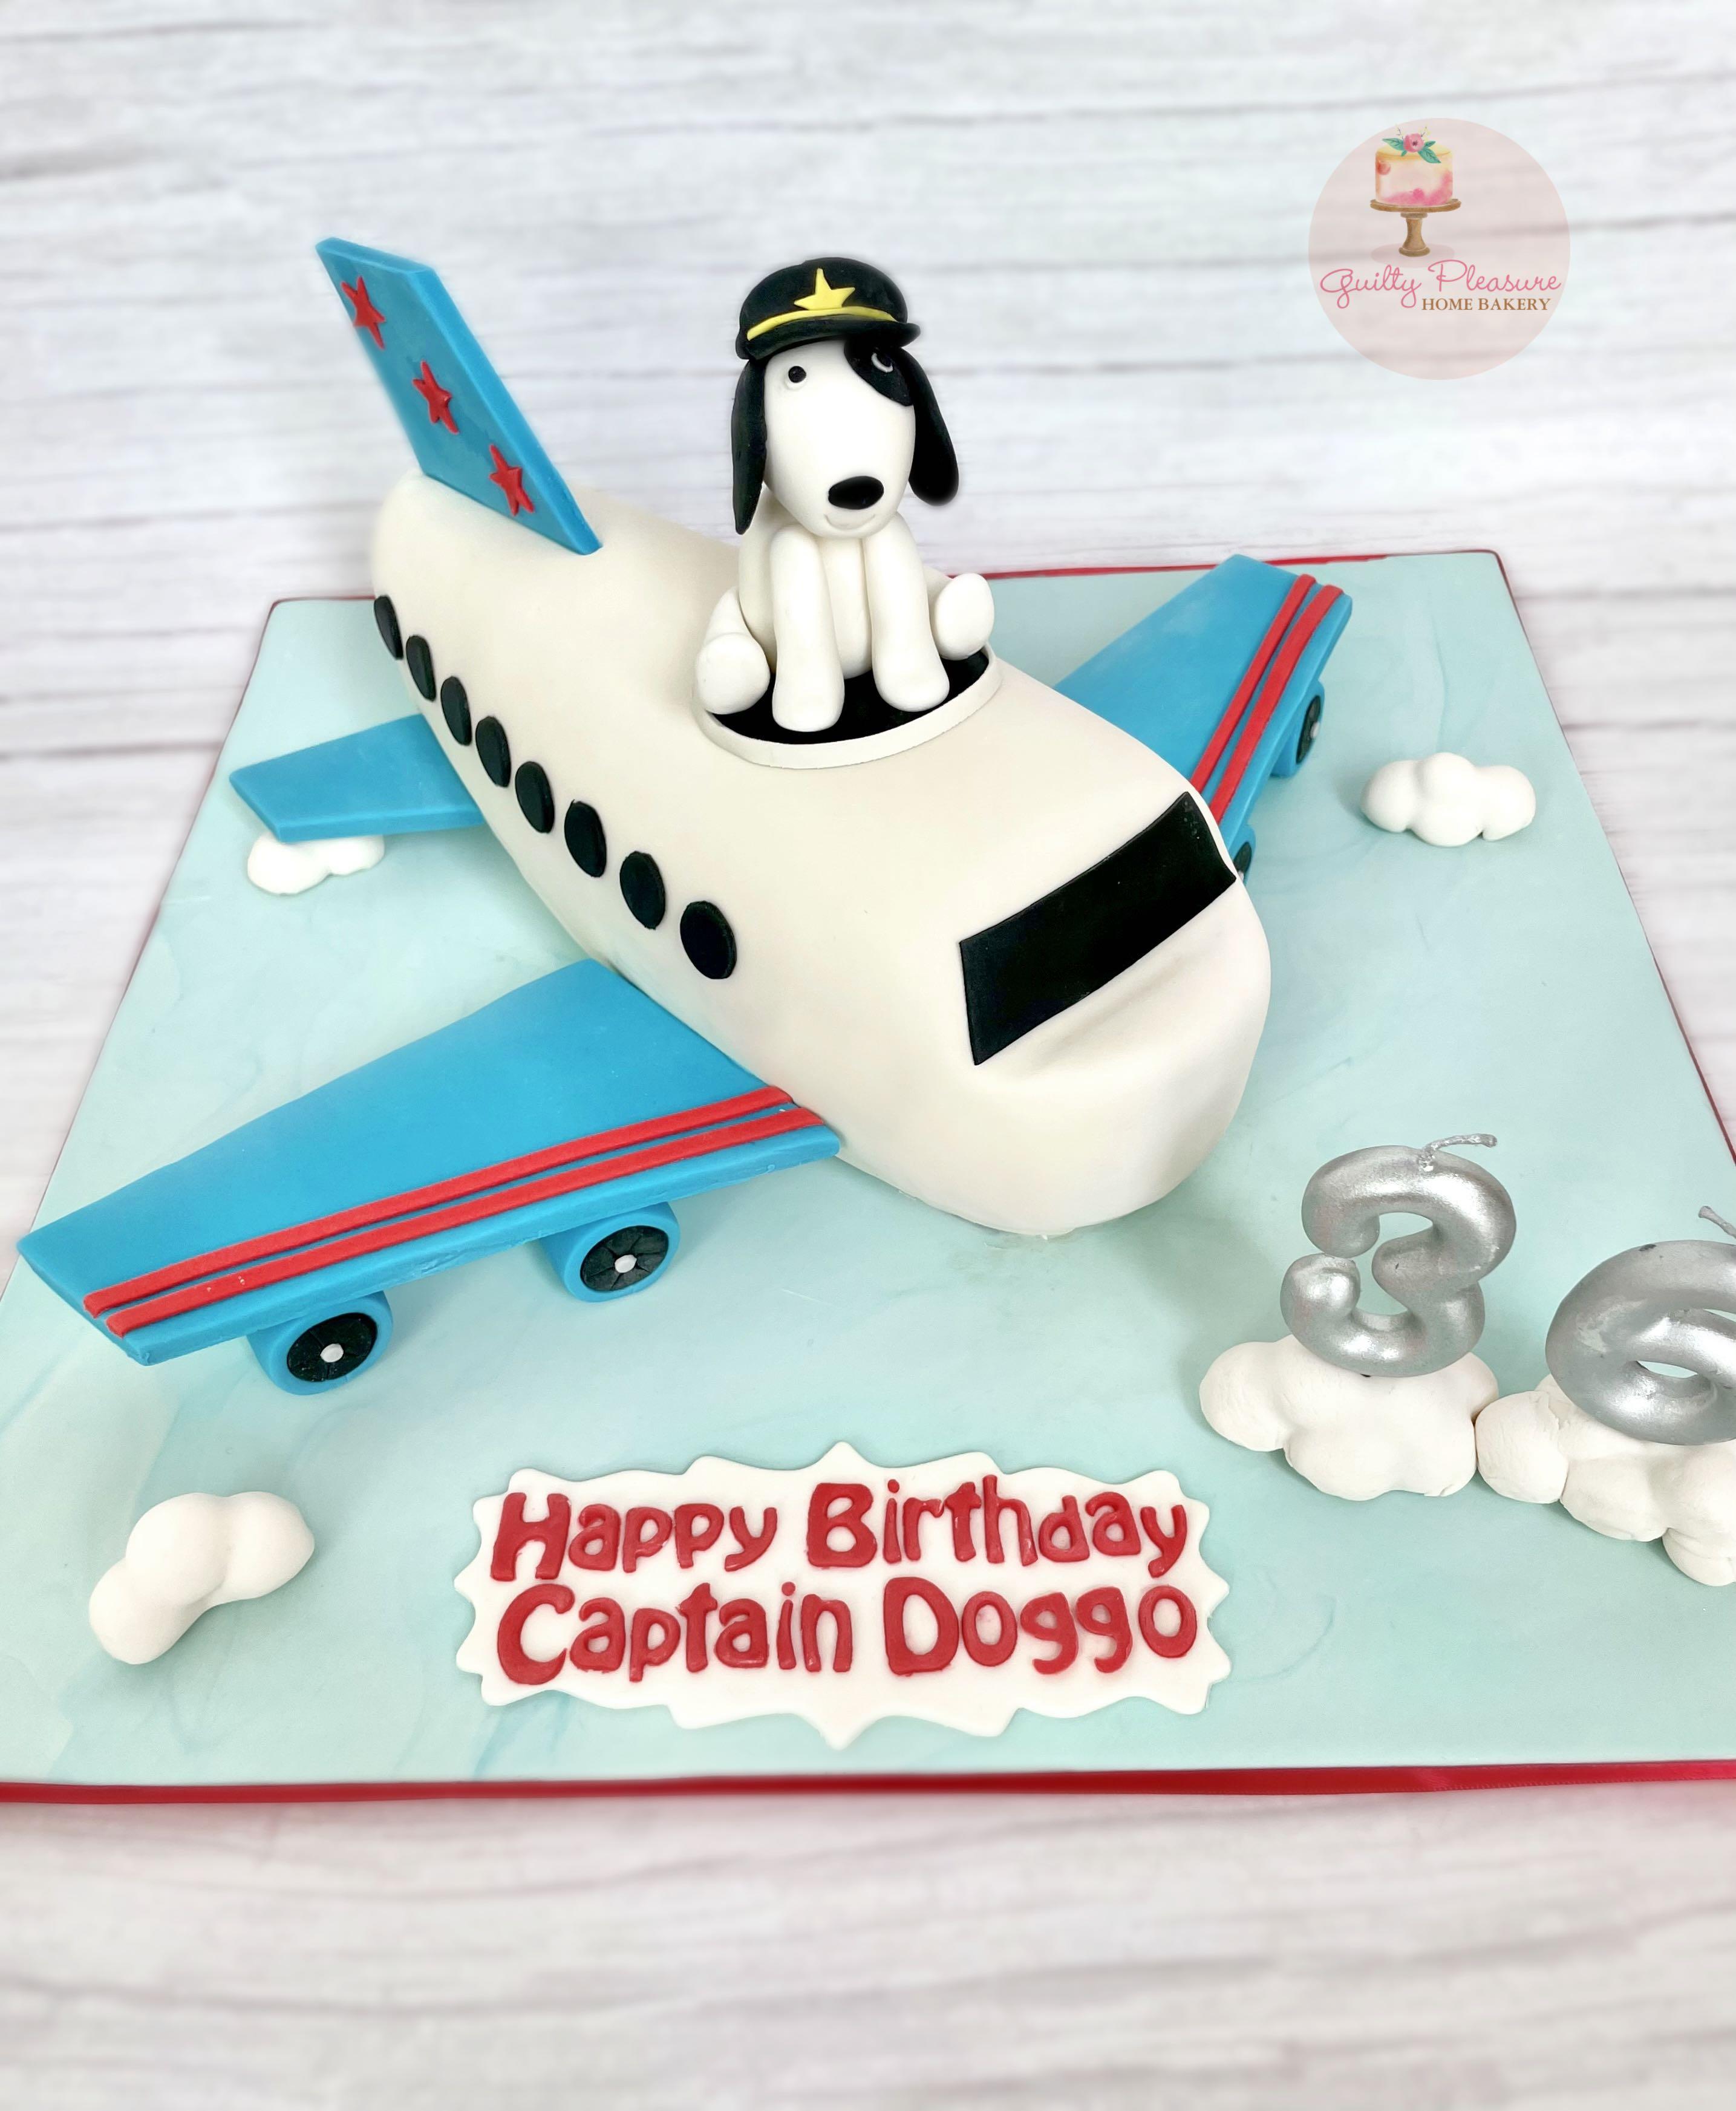 D'lish Cakes - Tui airplane cake xx | Facebook